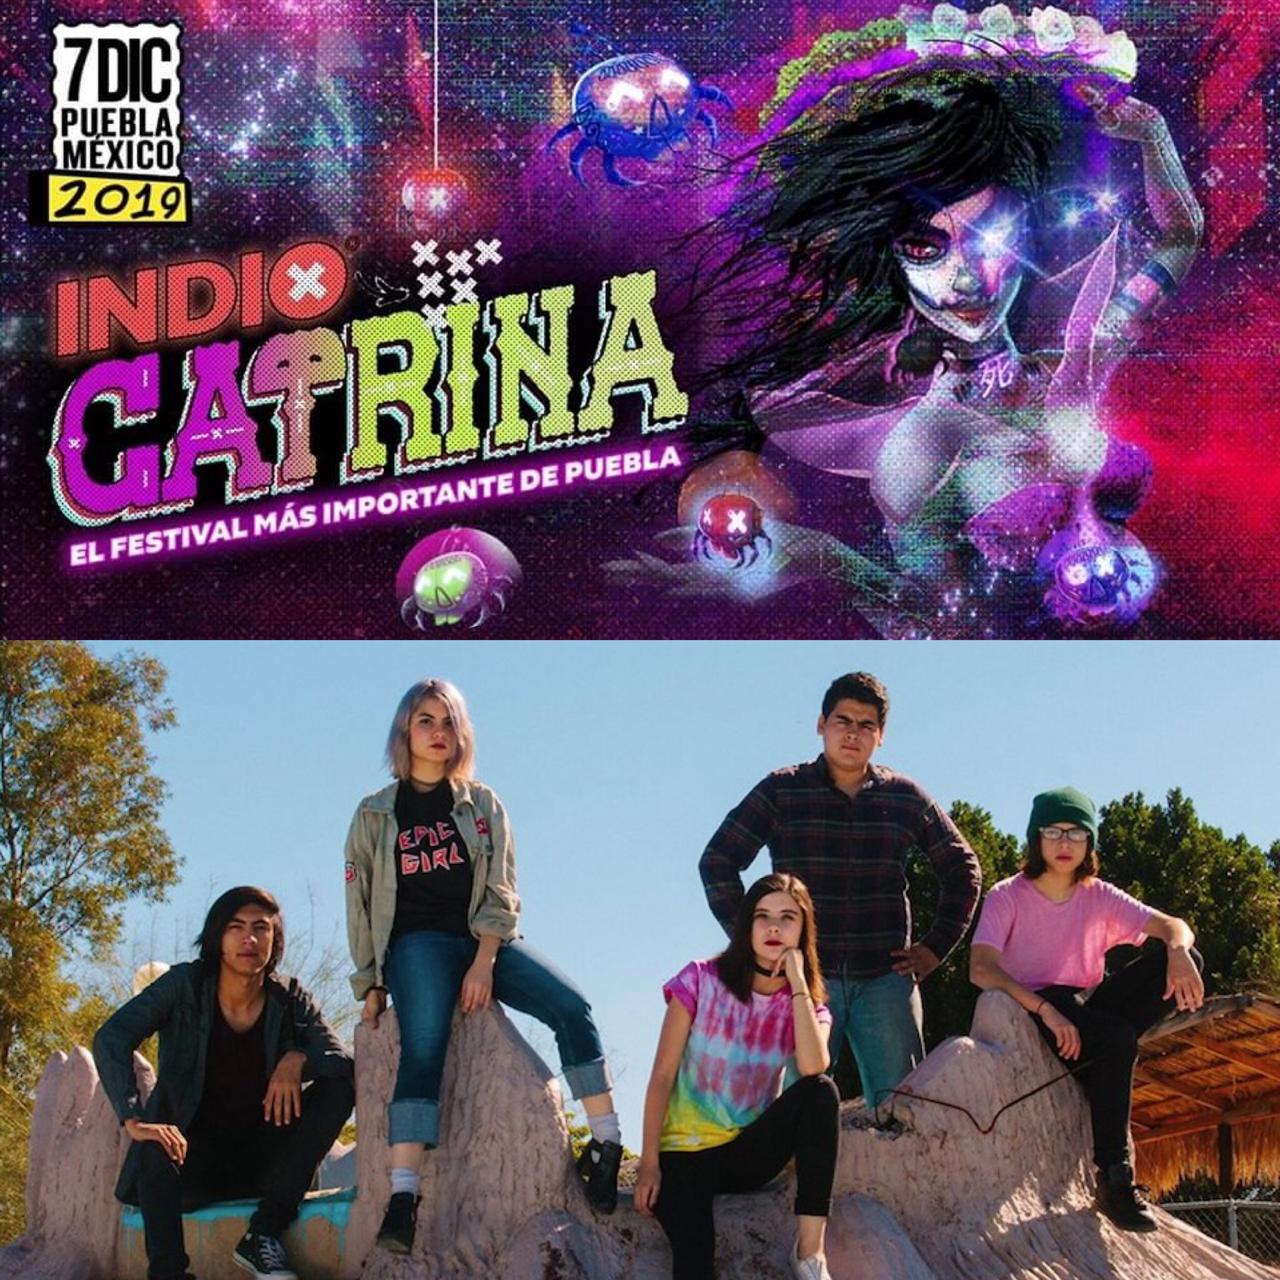 FESTIVAL CATRINA 2019: SEÑOR KINO